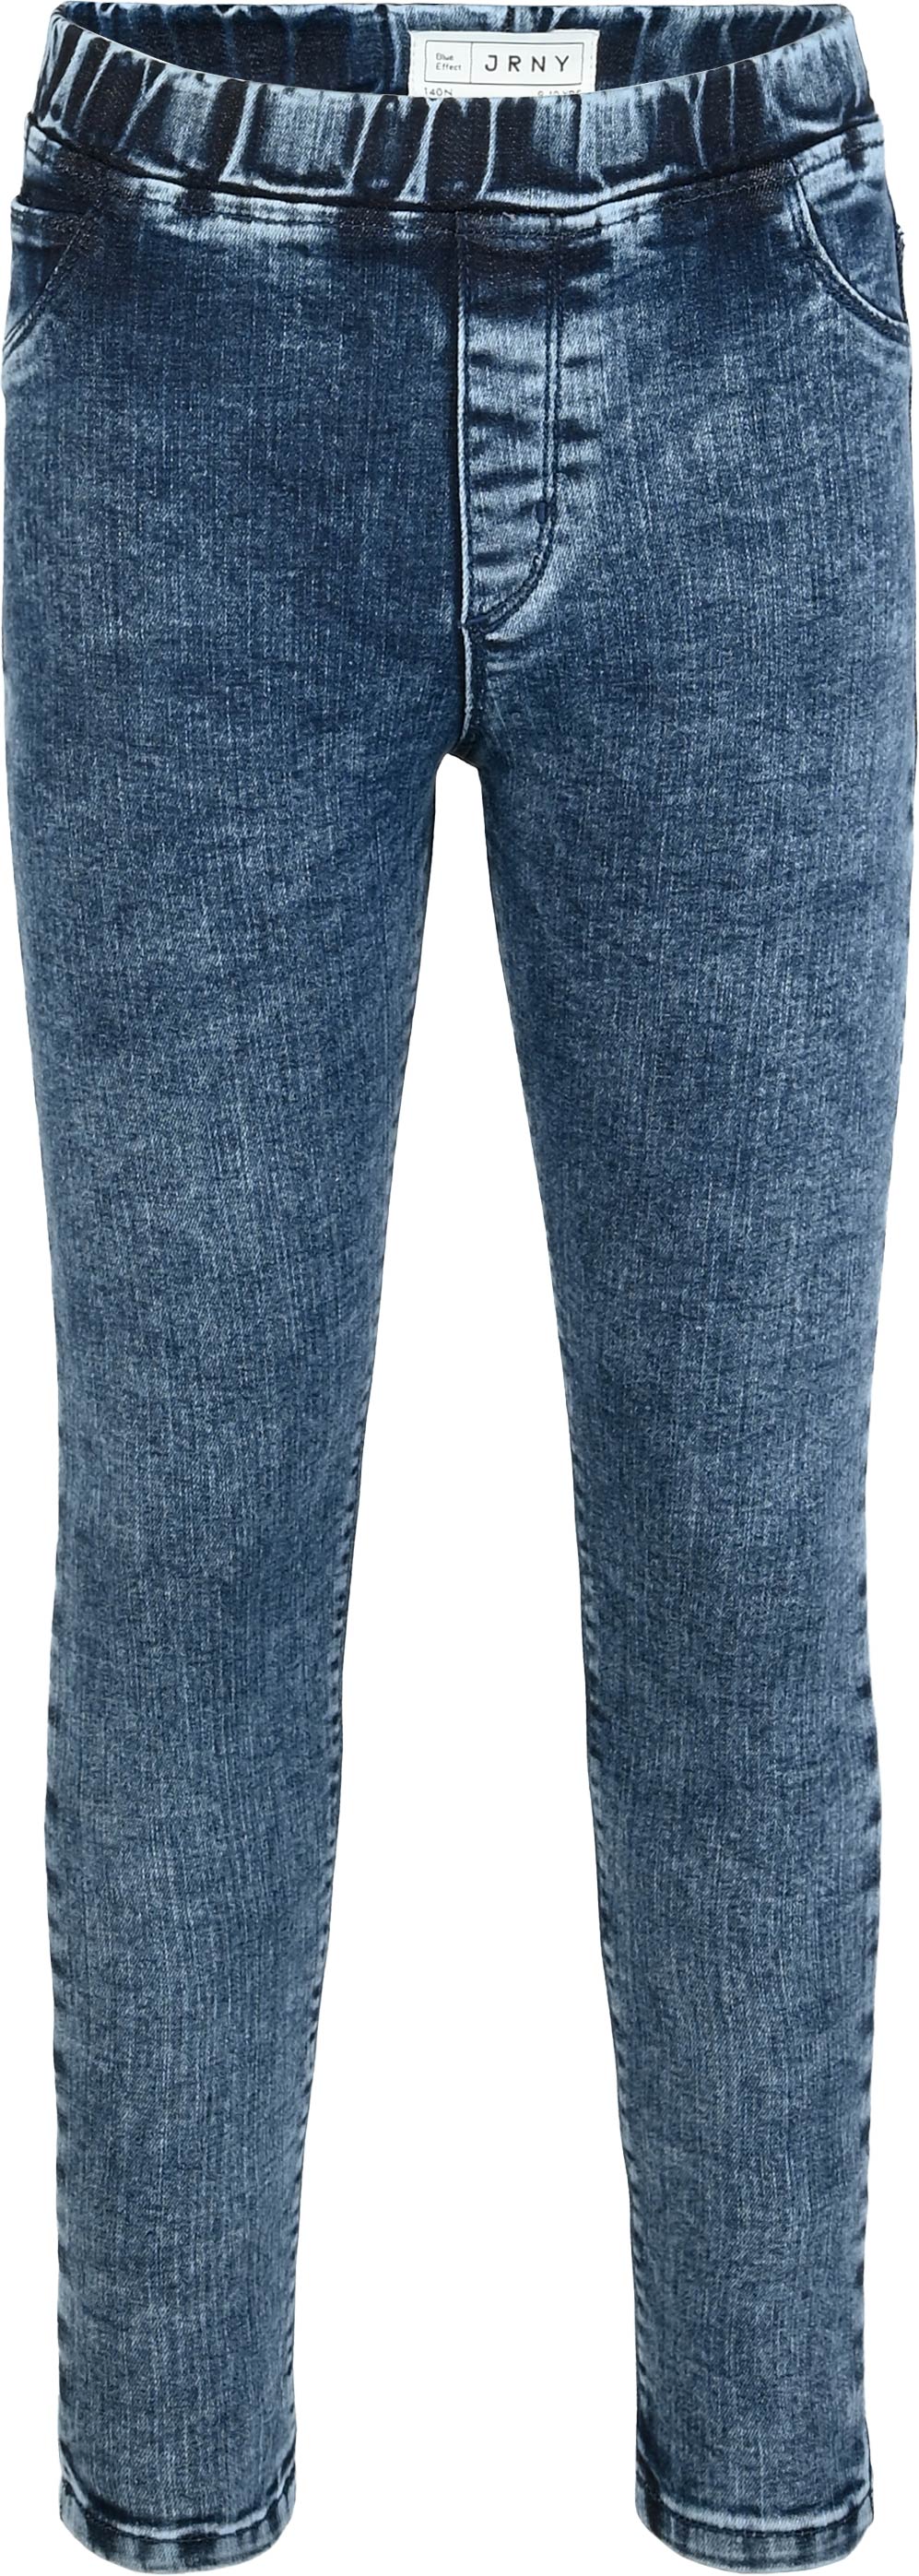 1402-JRNY Slip Waist Jeans Girls, verfügbar in Normal